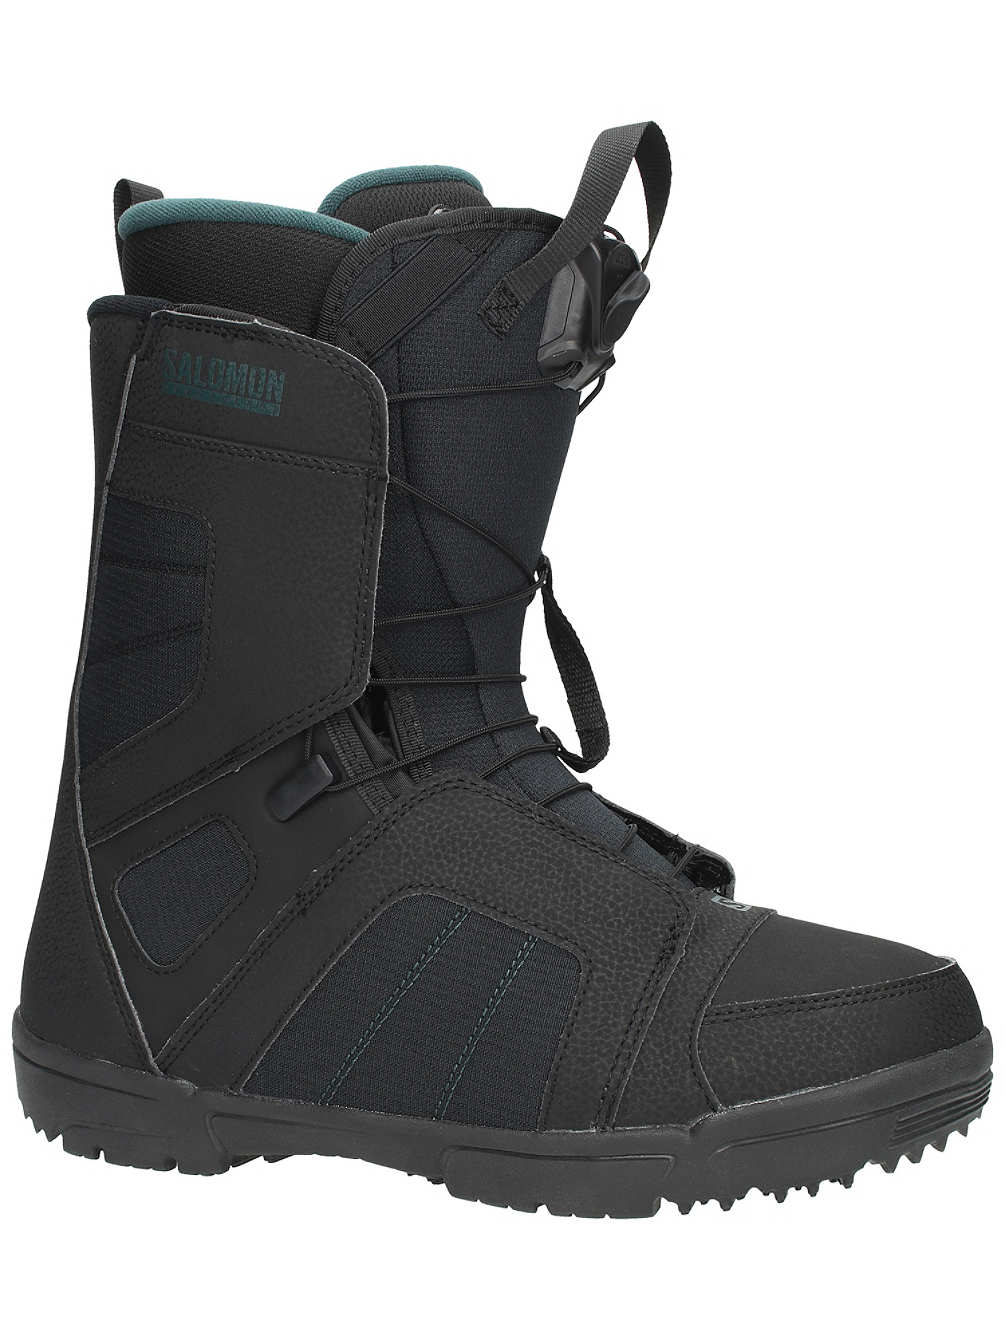 Salomon Snowboard Boots 2020 – Demo Sport